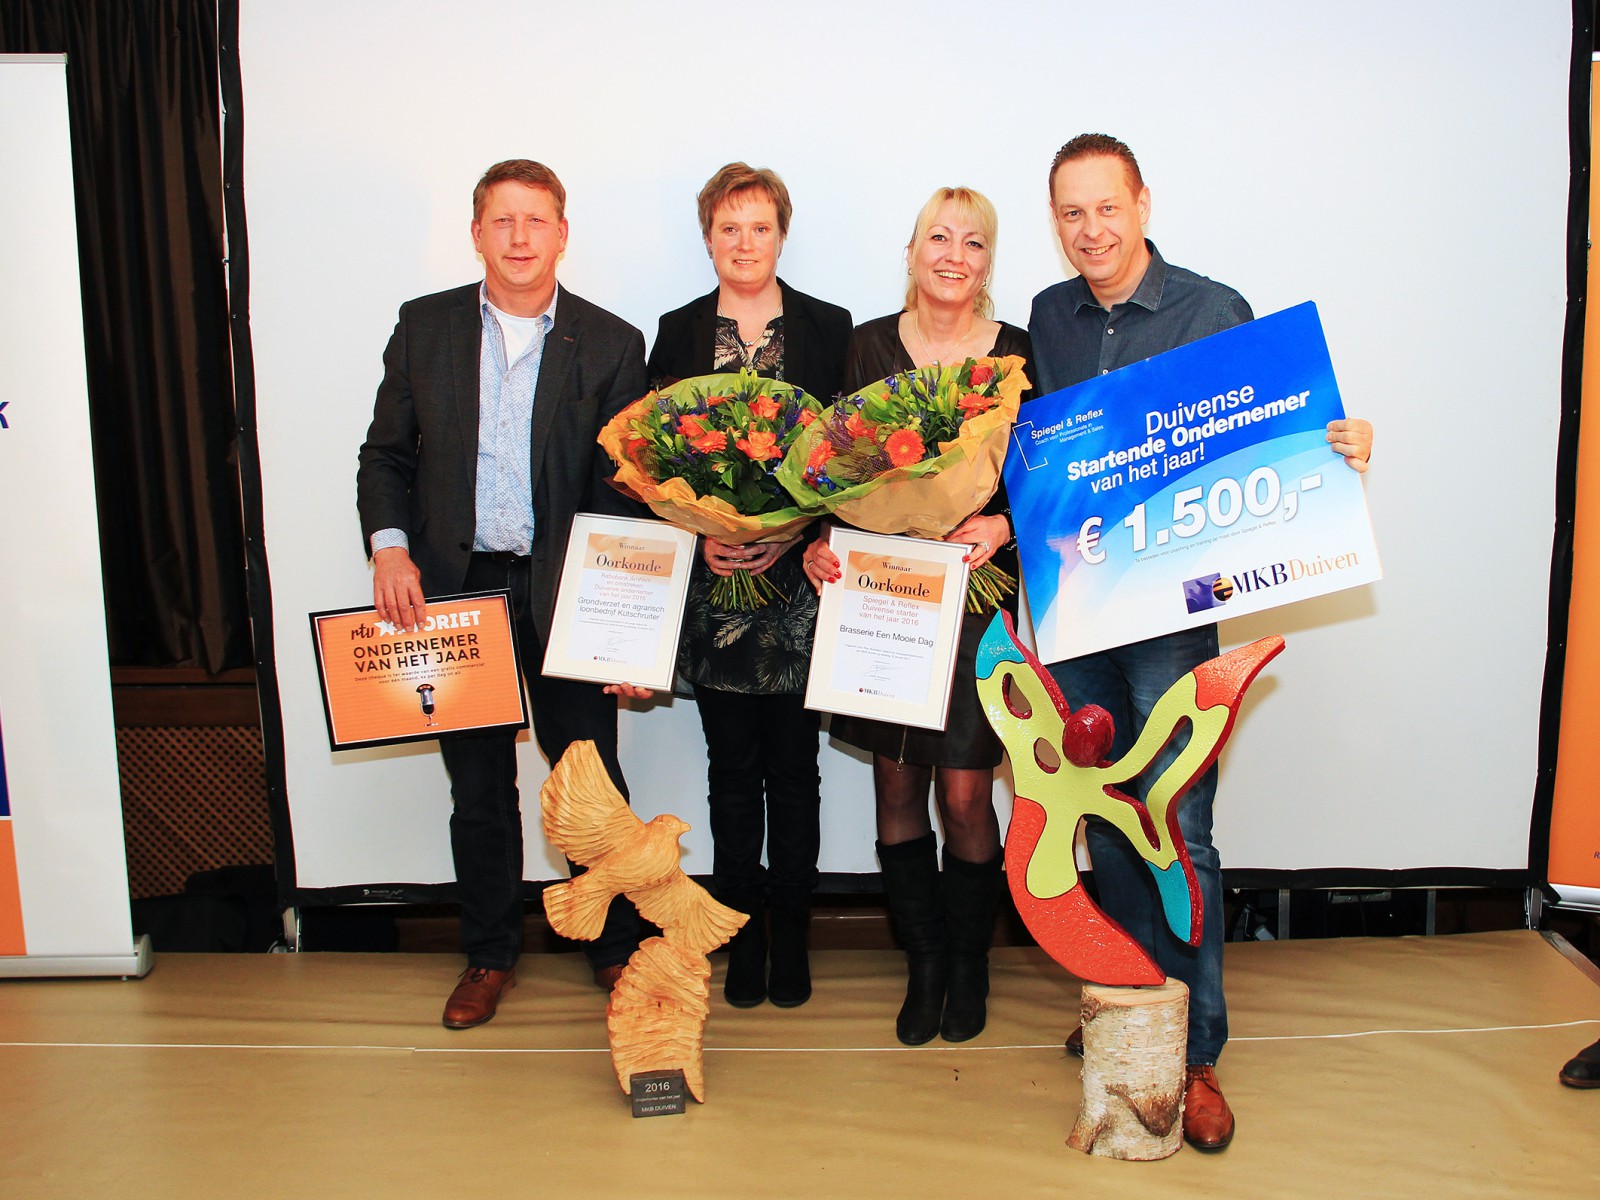 Jan Kütschruiter en Patricia Dhondt & Edwin Tunnissen winnen Duivense ondernemersprijzen van 2016